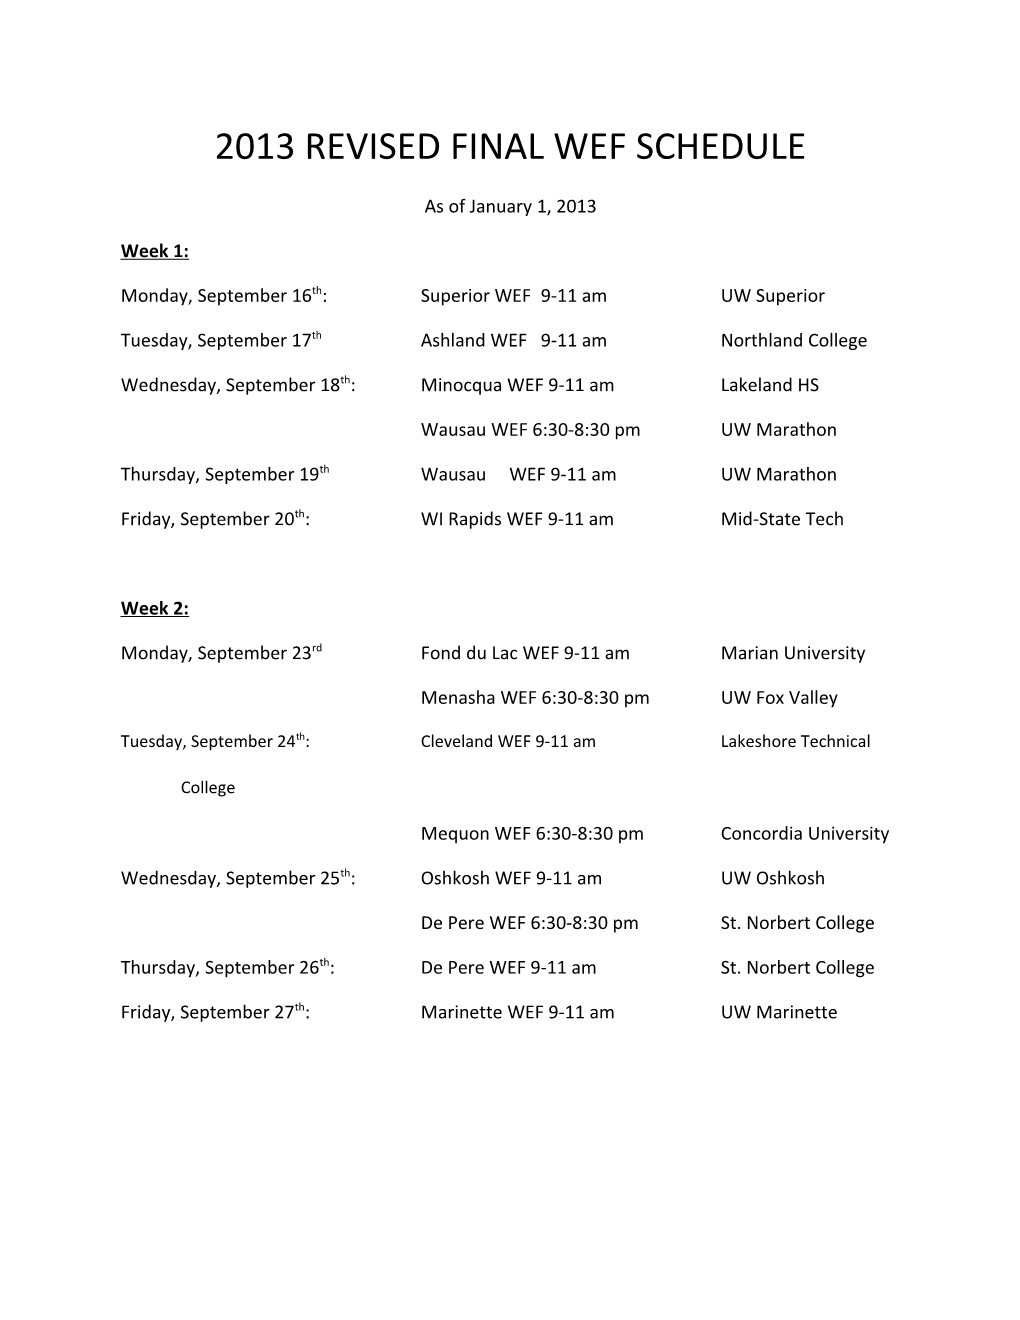 2013 Revised Final Wef Schedule